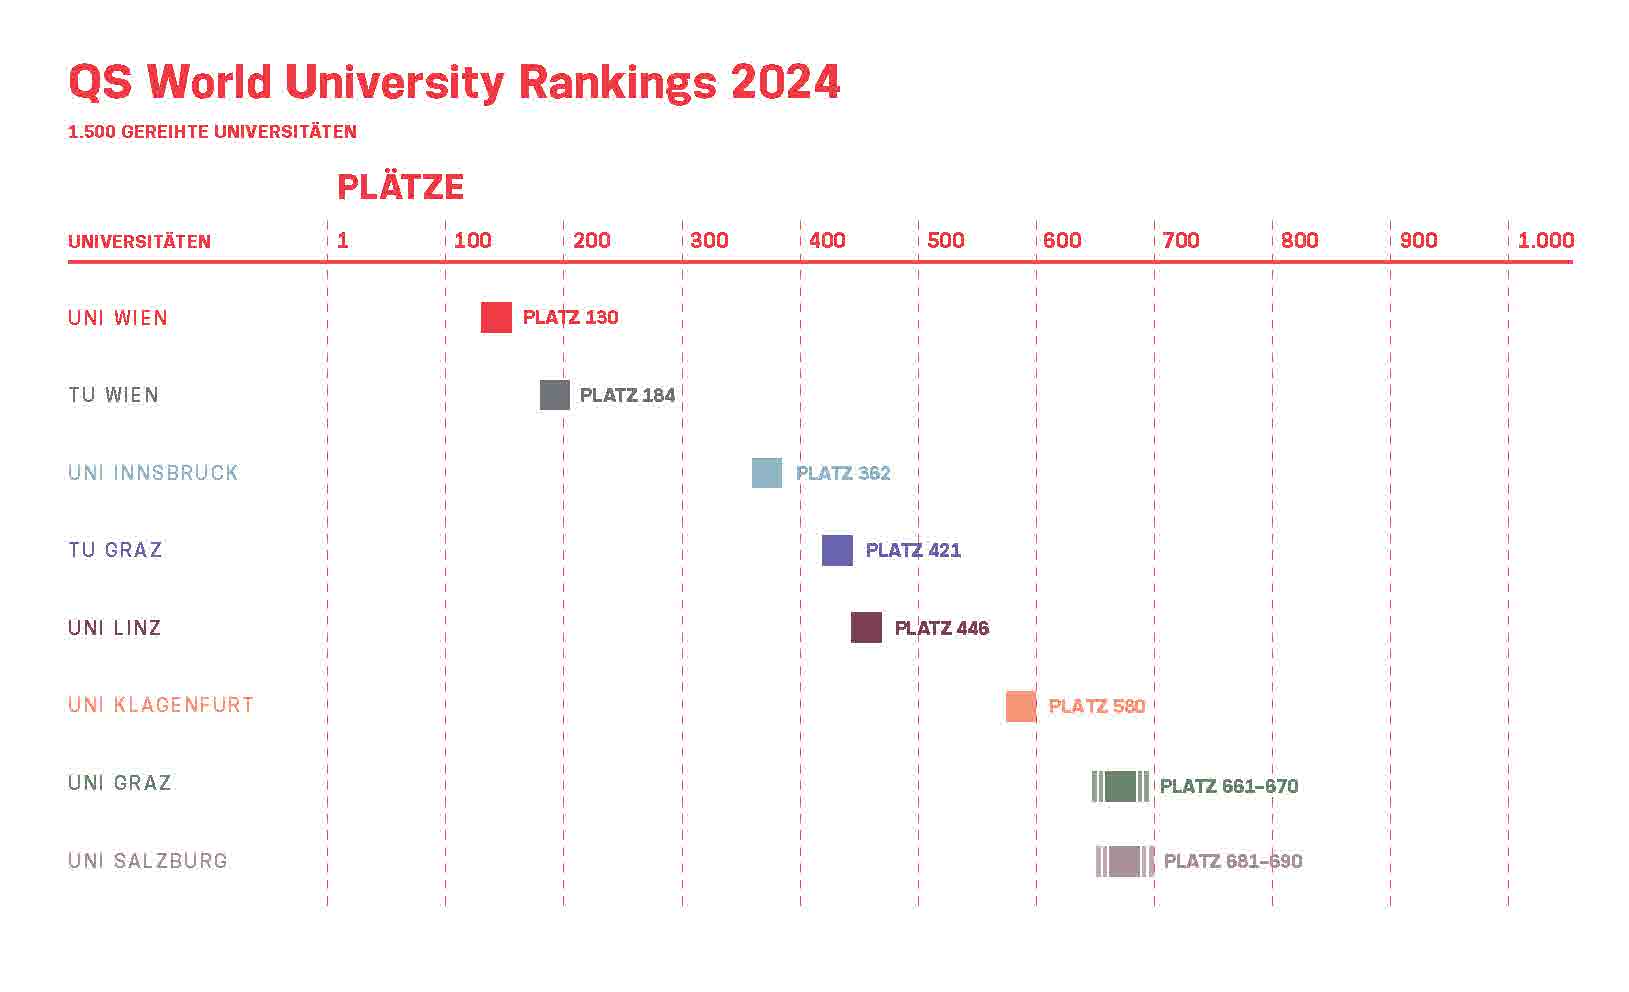 6.qs World University Rankings 2024 Comp 